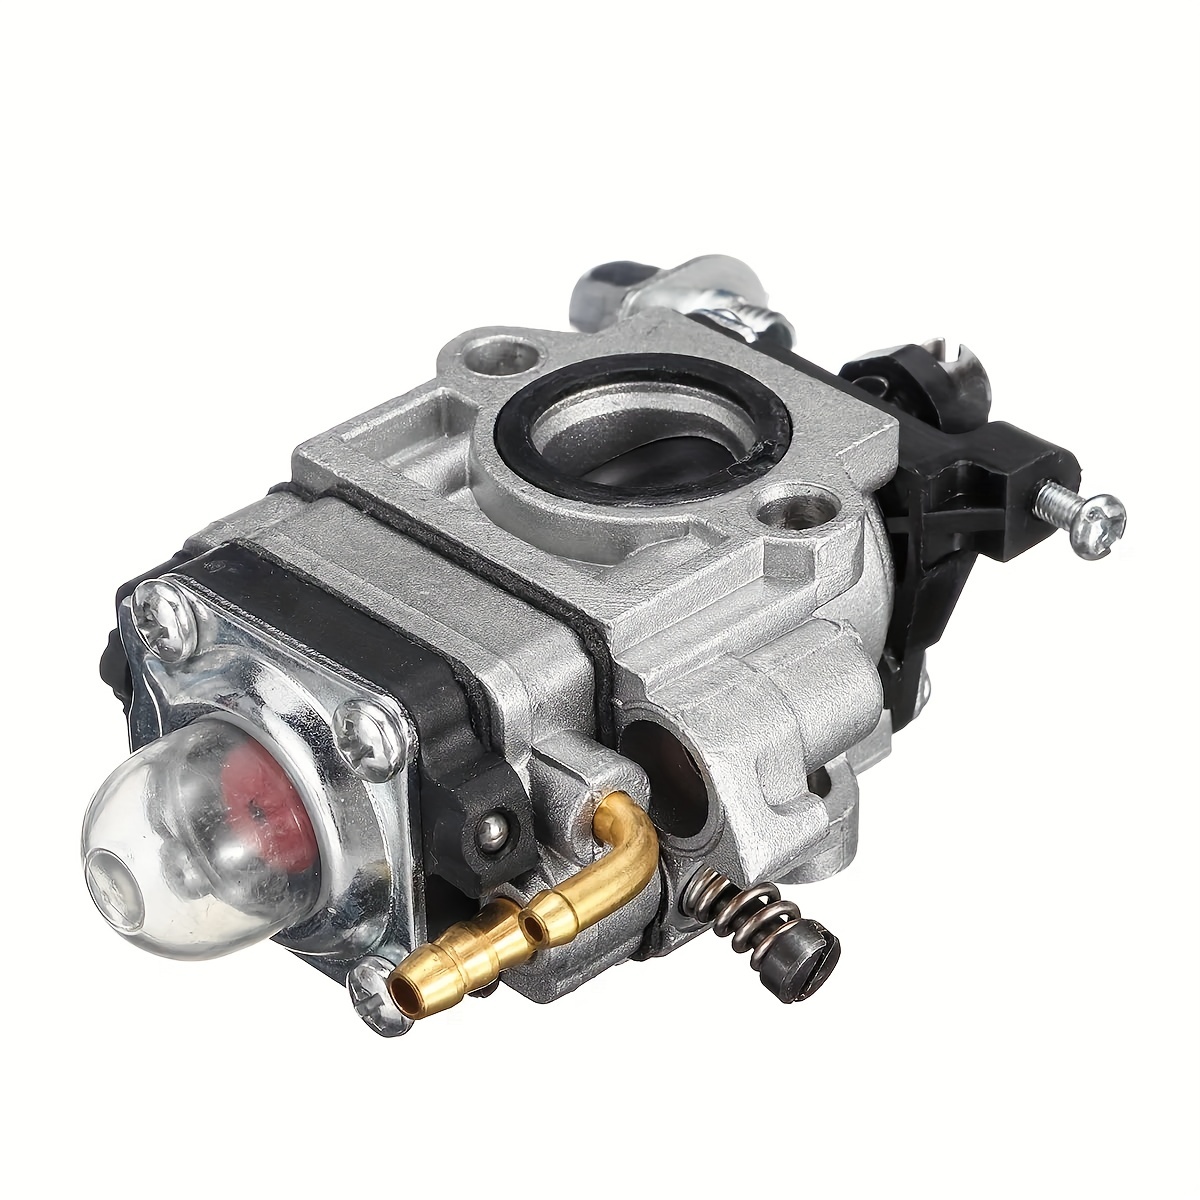 ┊ 13mm Carburetor Carb Motorcycle Conversion For 47cc 49cc Mini Moto Engine